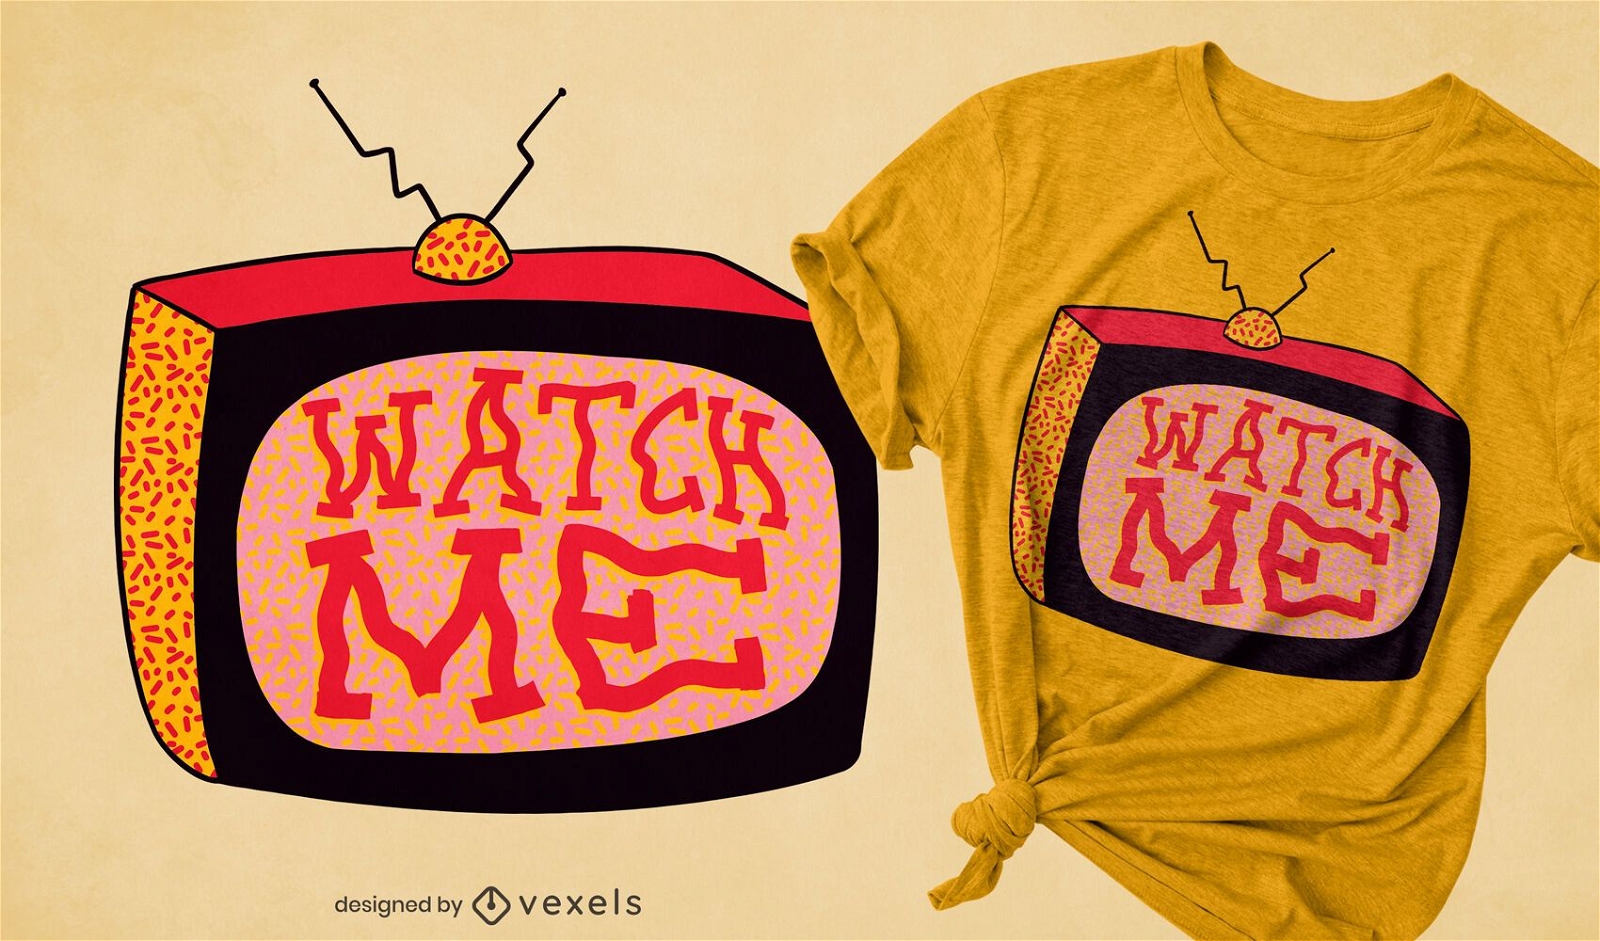 Retro television watch t-shirt design